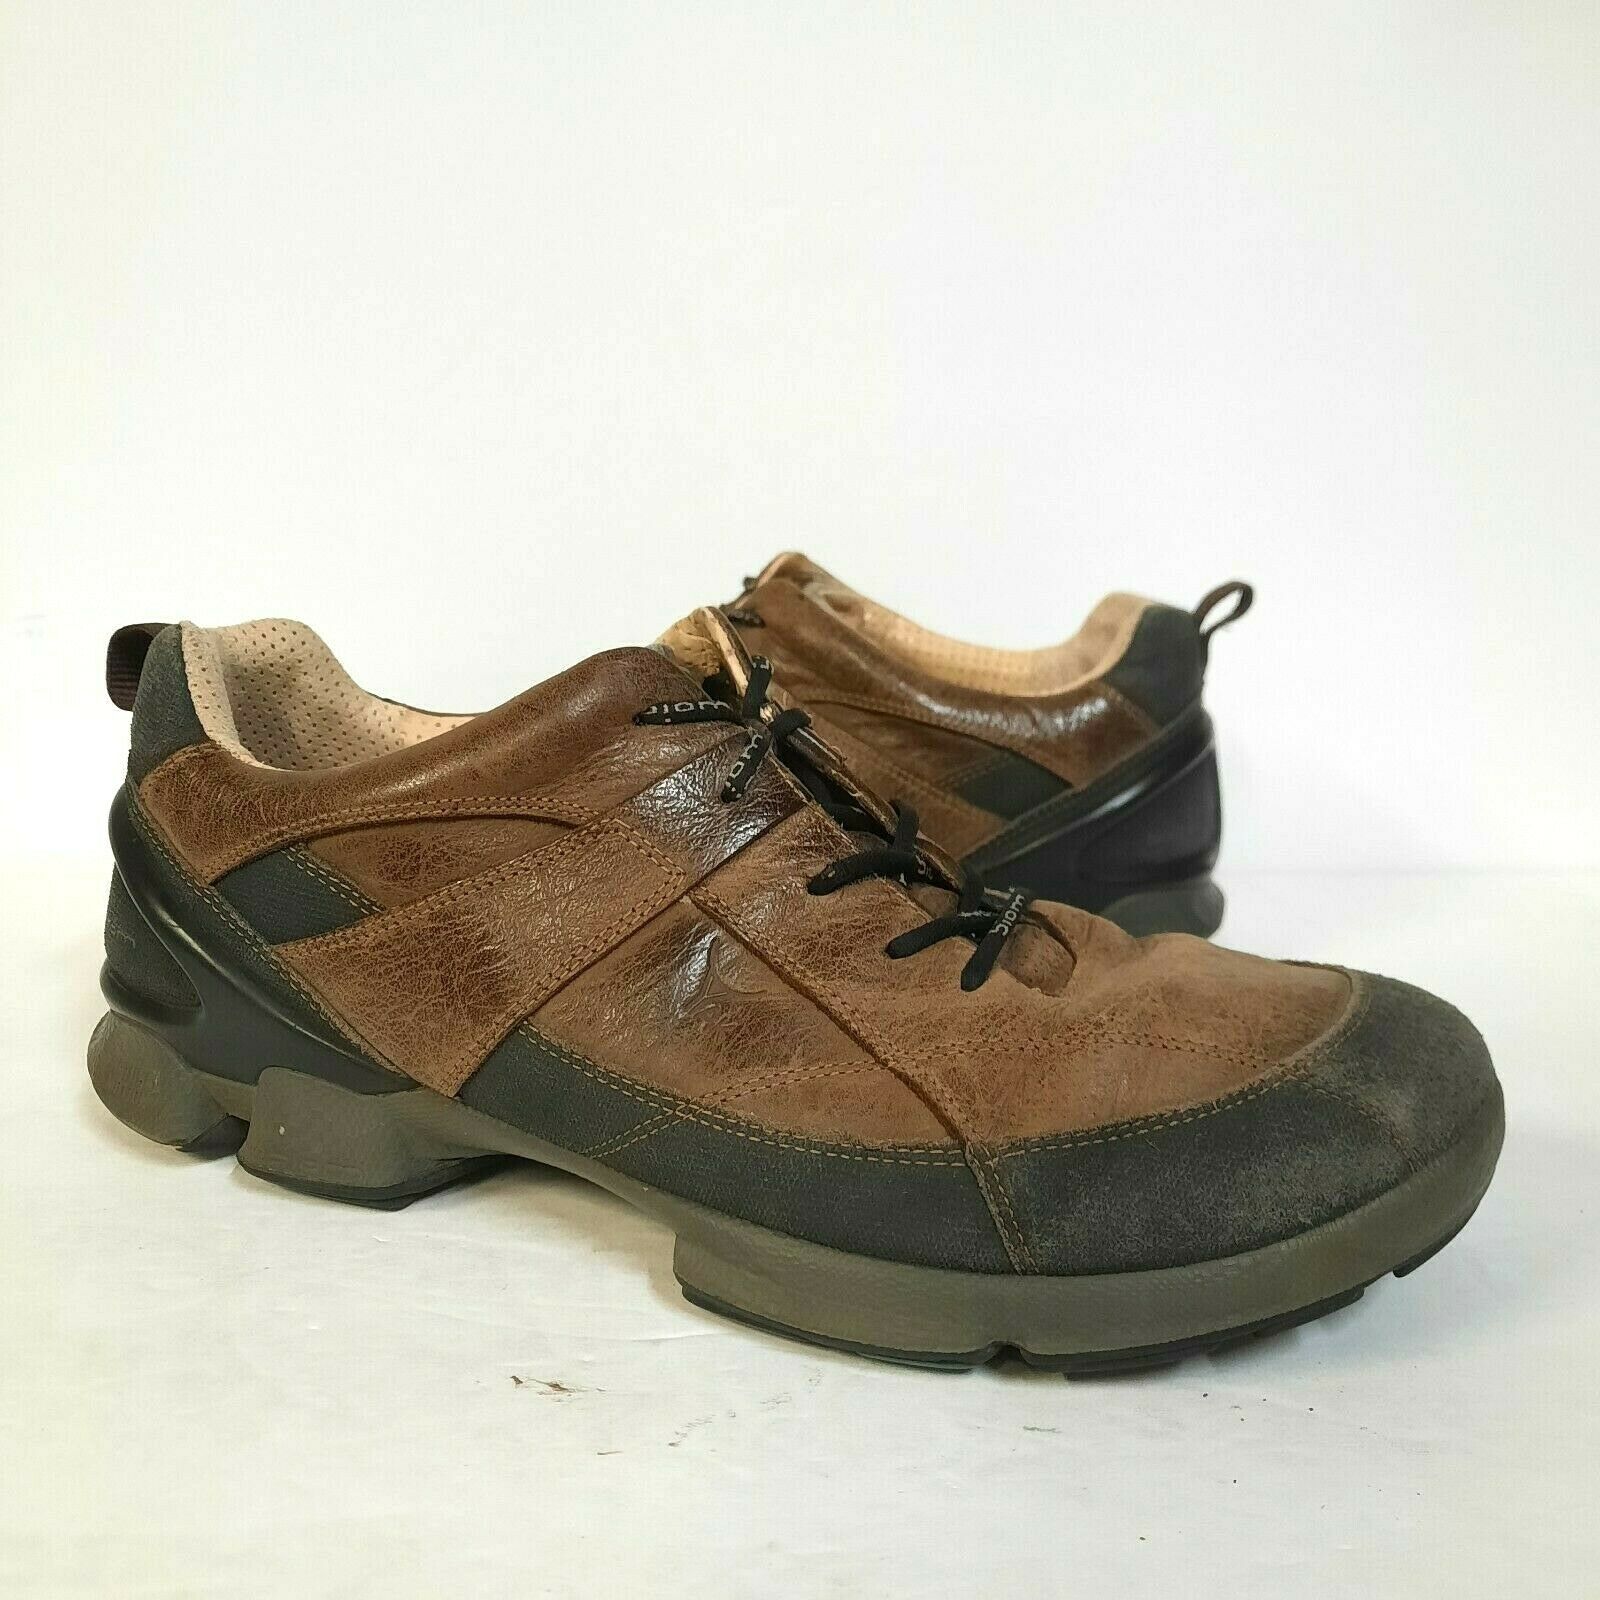 Ecco Biom Natural Motion Yak Mens Size 43 EU 12 US Shoes Sneakers Hiking Brown